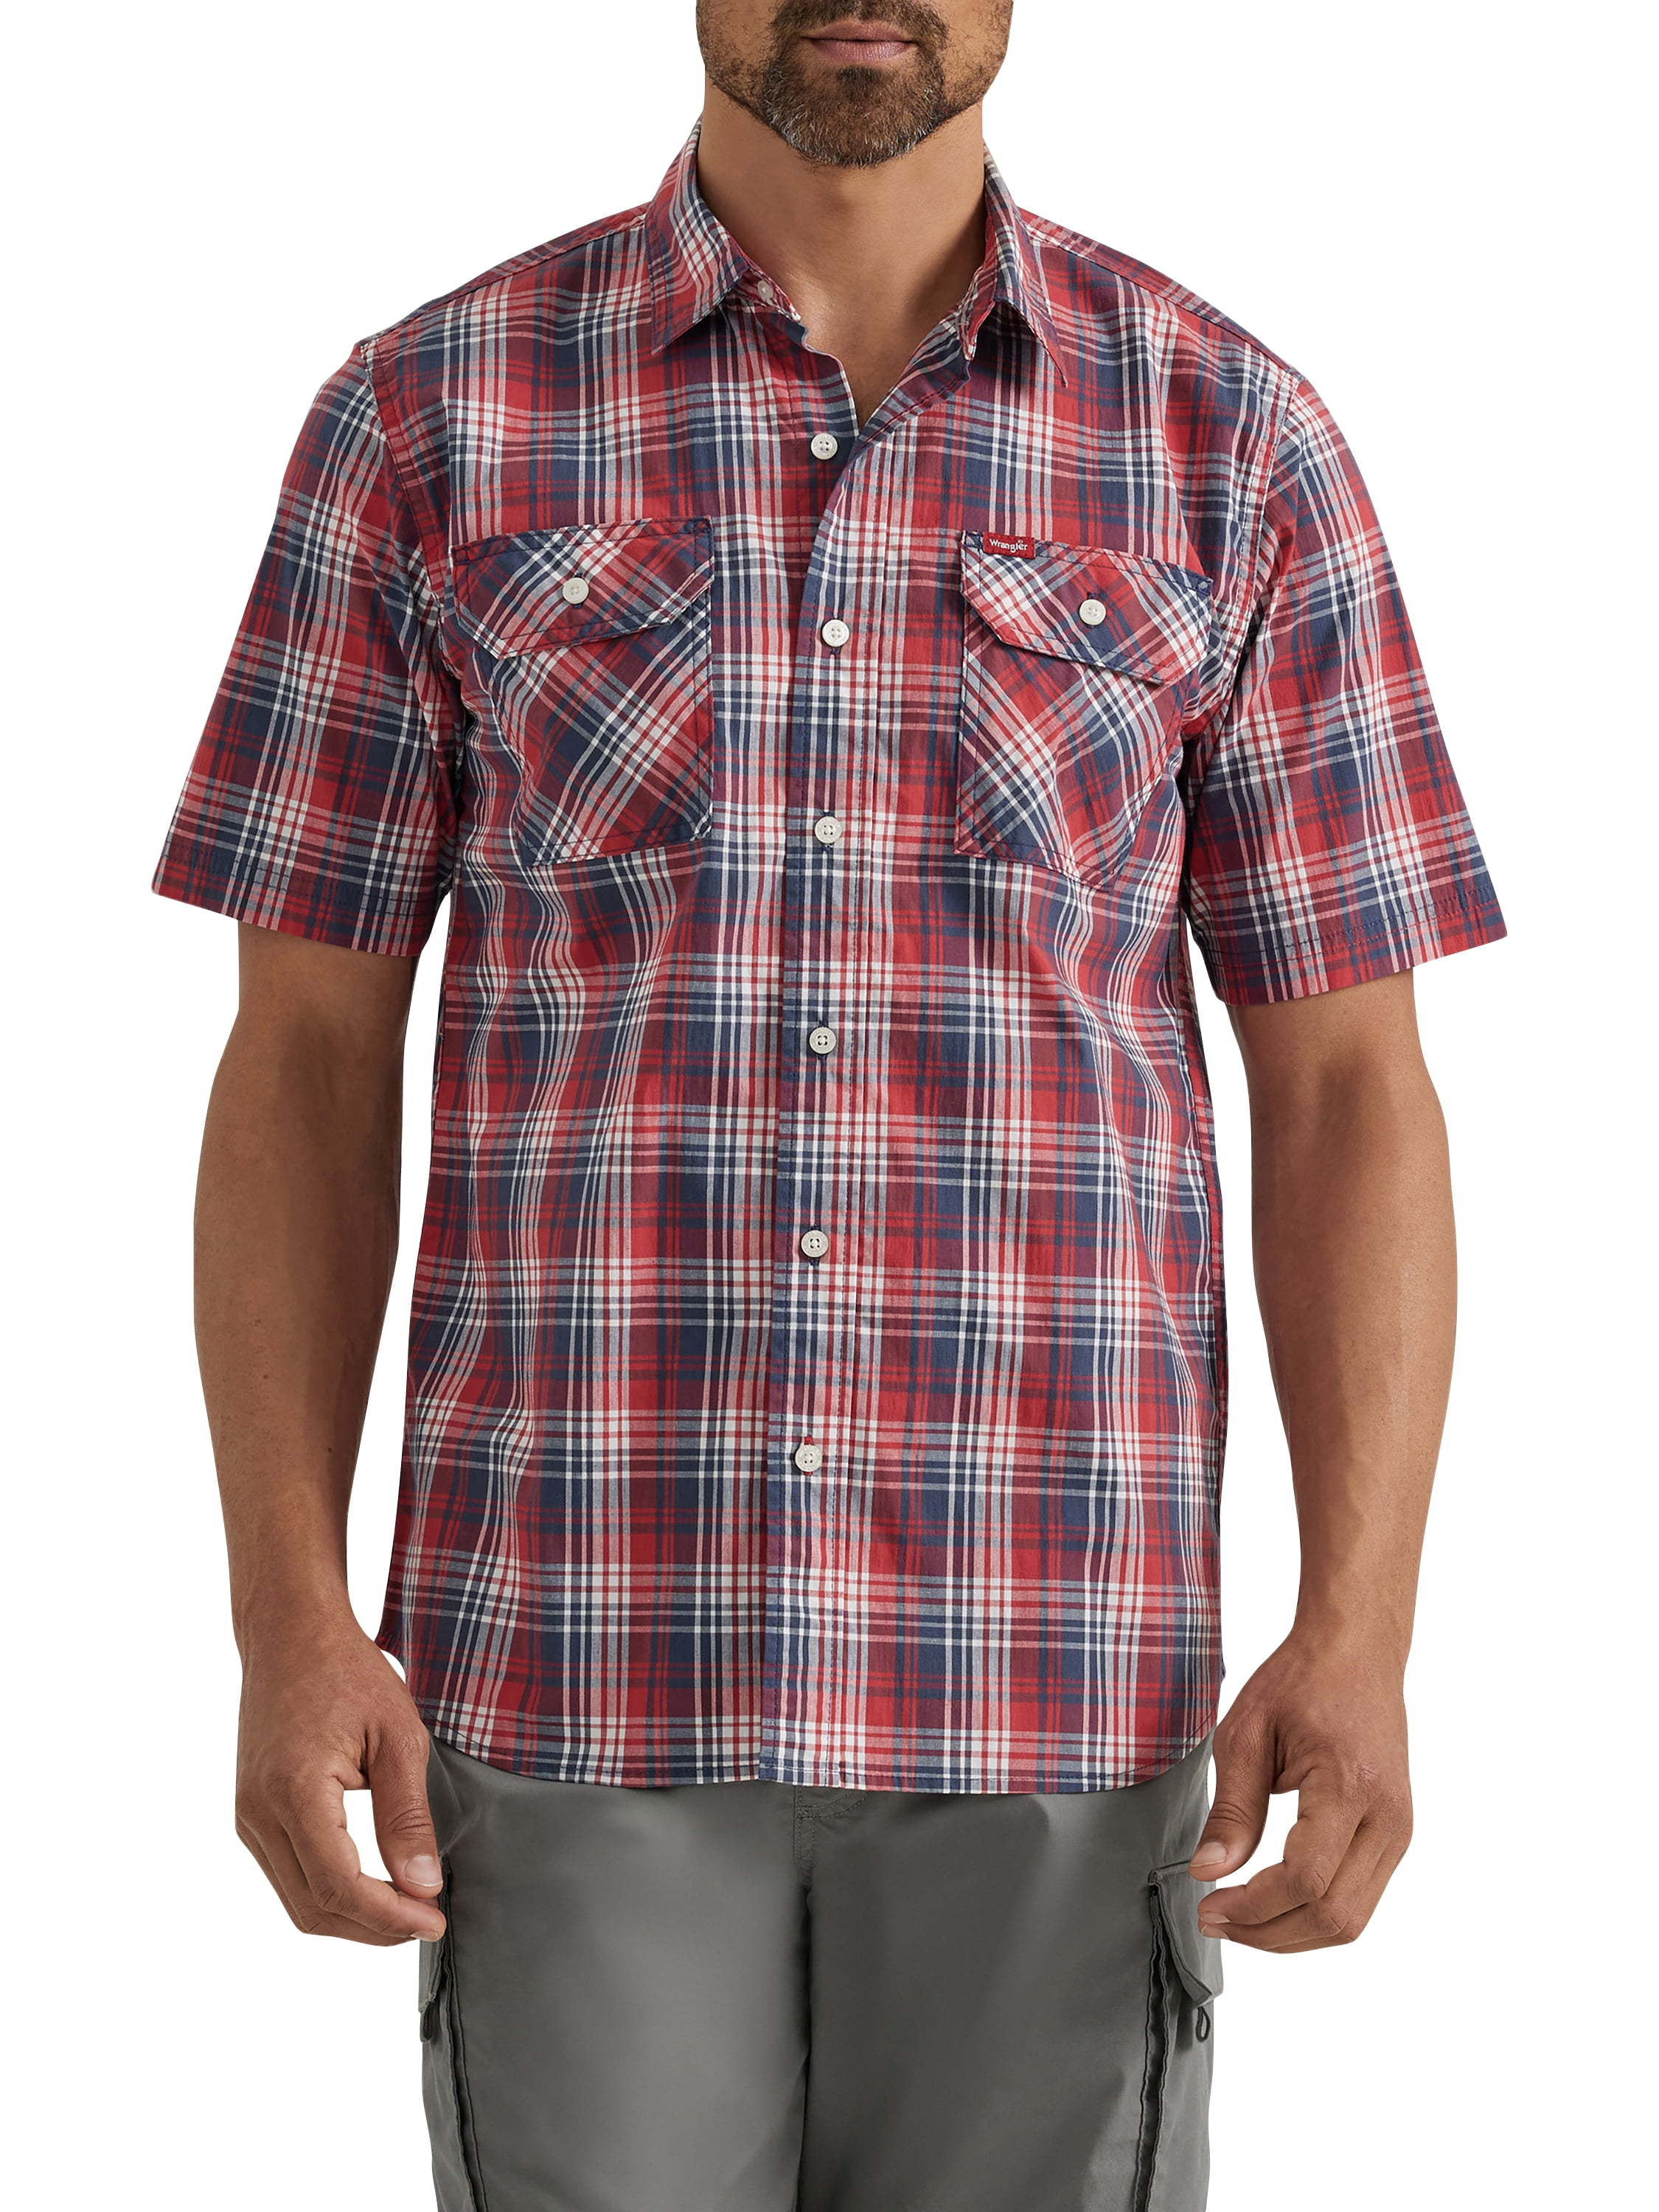 Wrangler® Men's Short Sleeve Plaid Shirt, Sizes S-5XL - Walmart.com